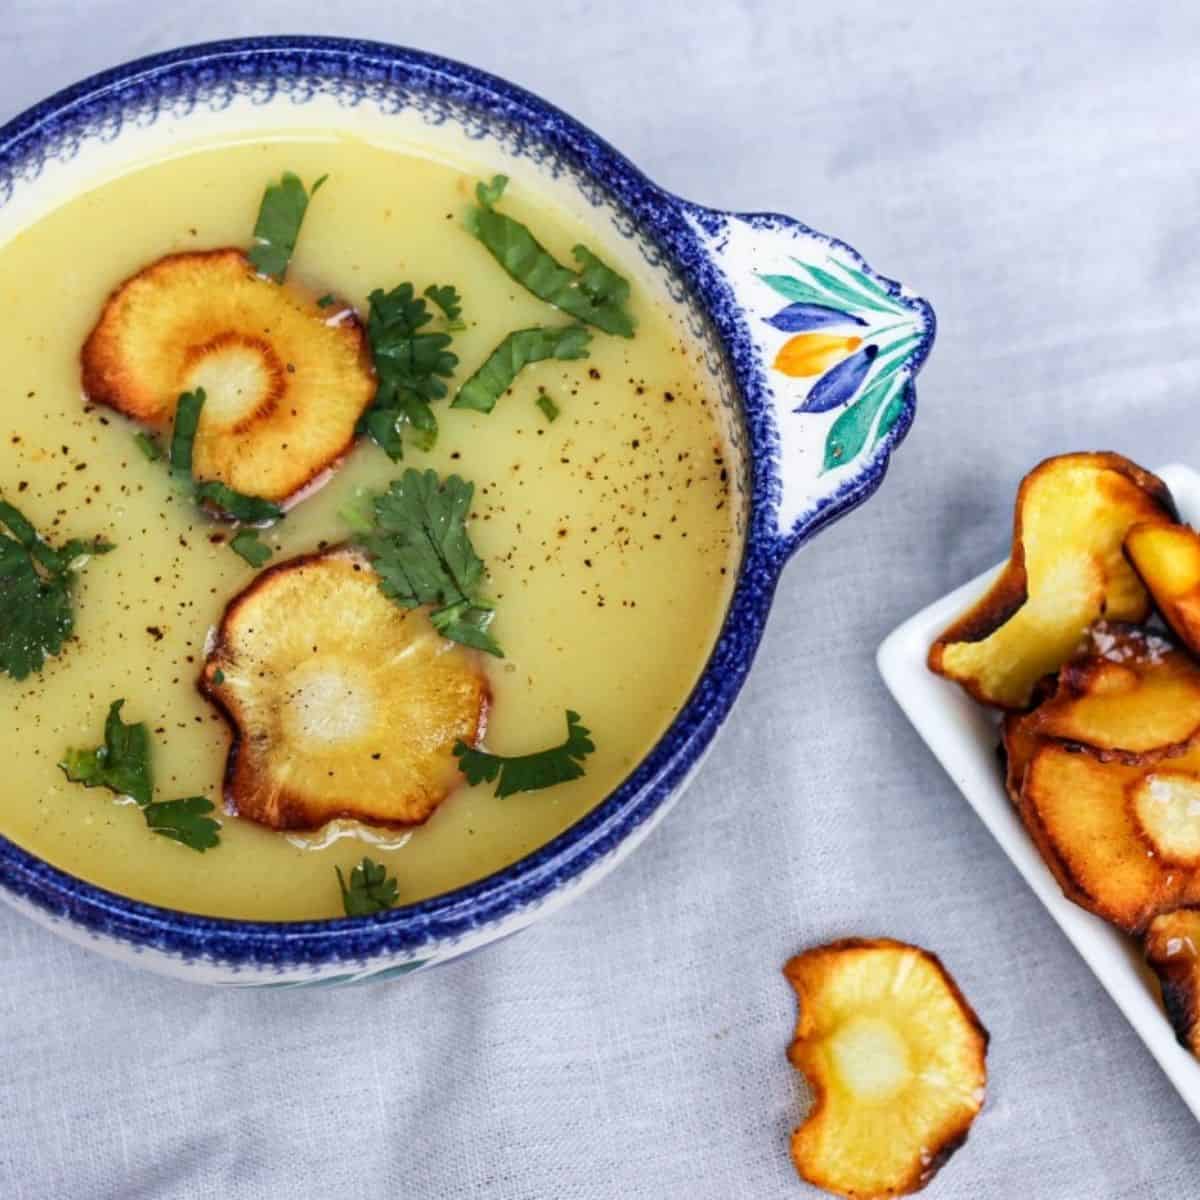 How to Make Vegan Parsnip Soup